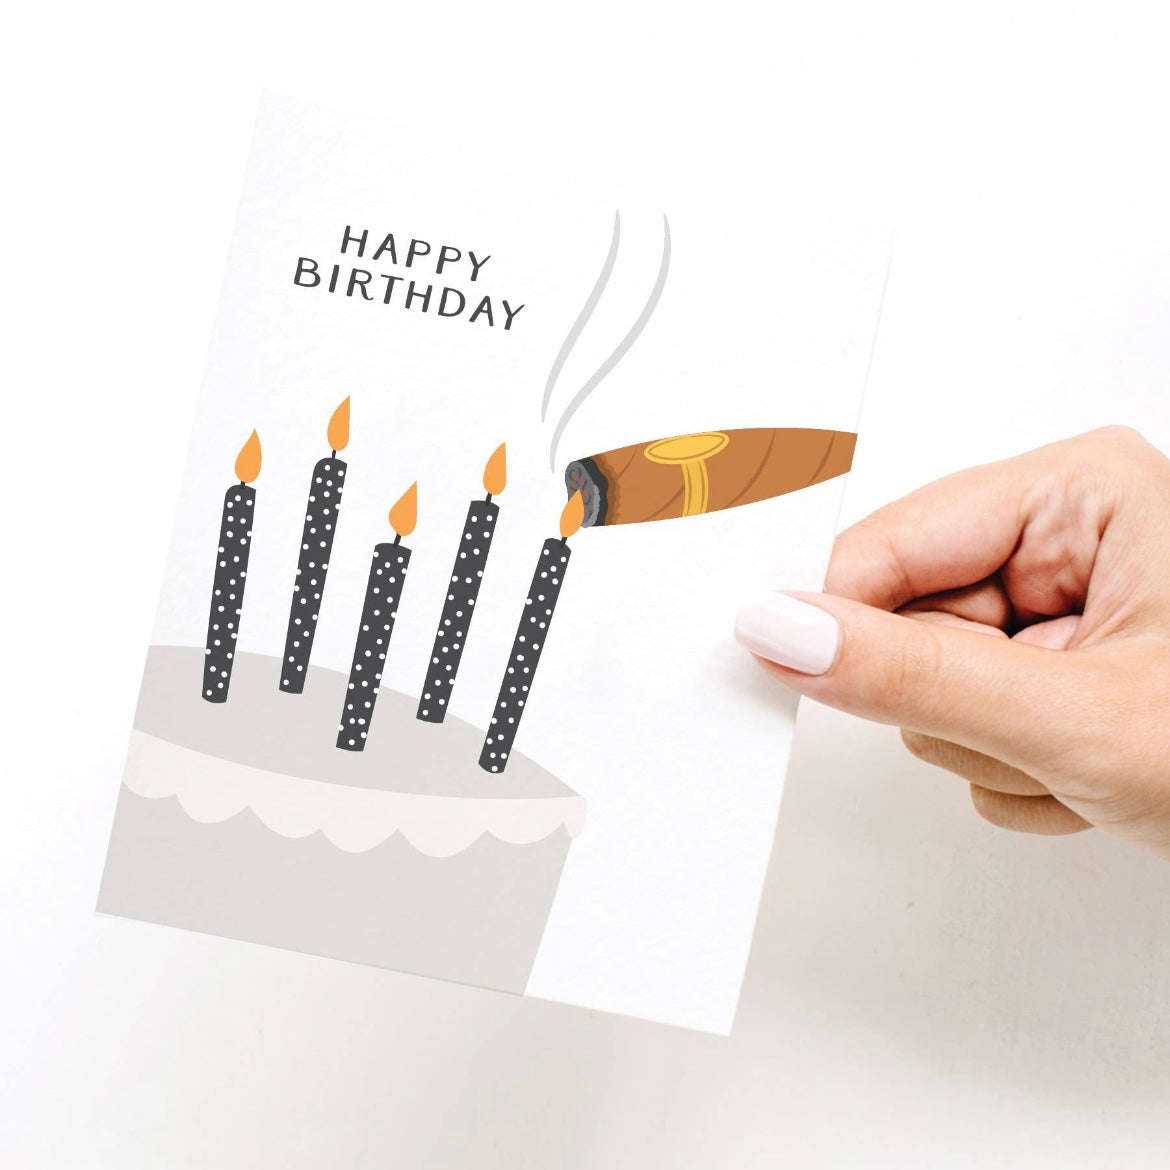 card 'happy birthday cigar'